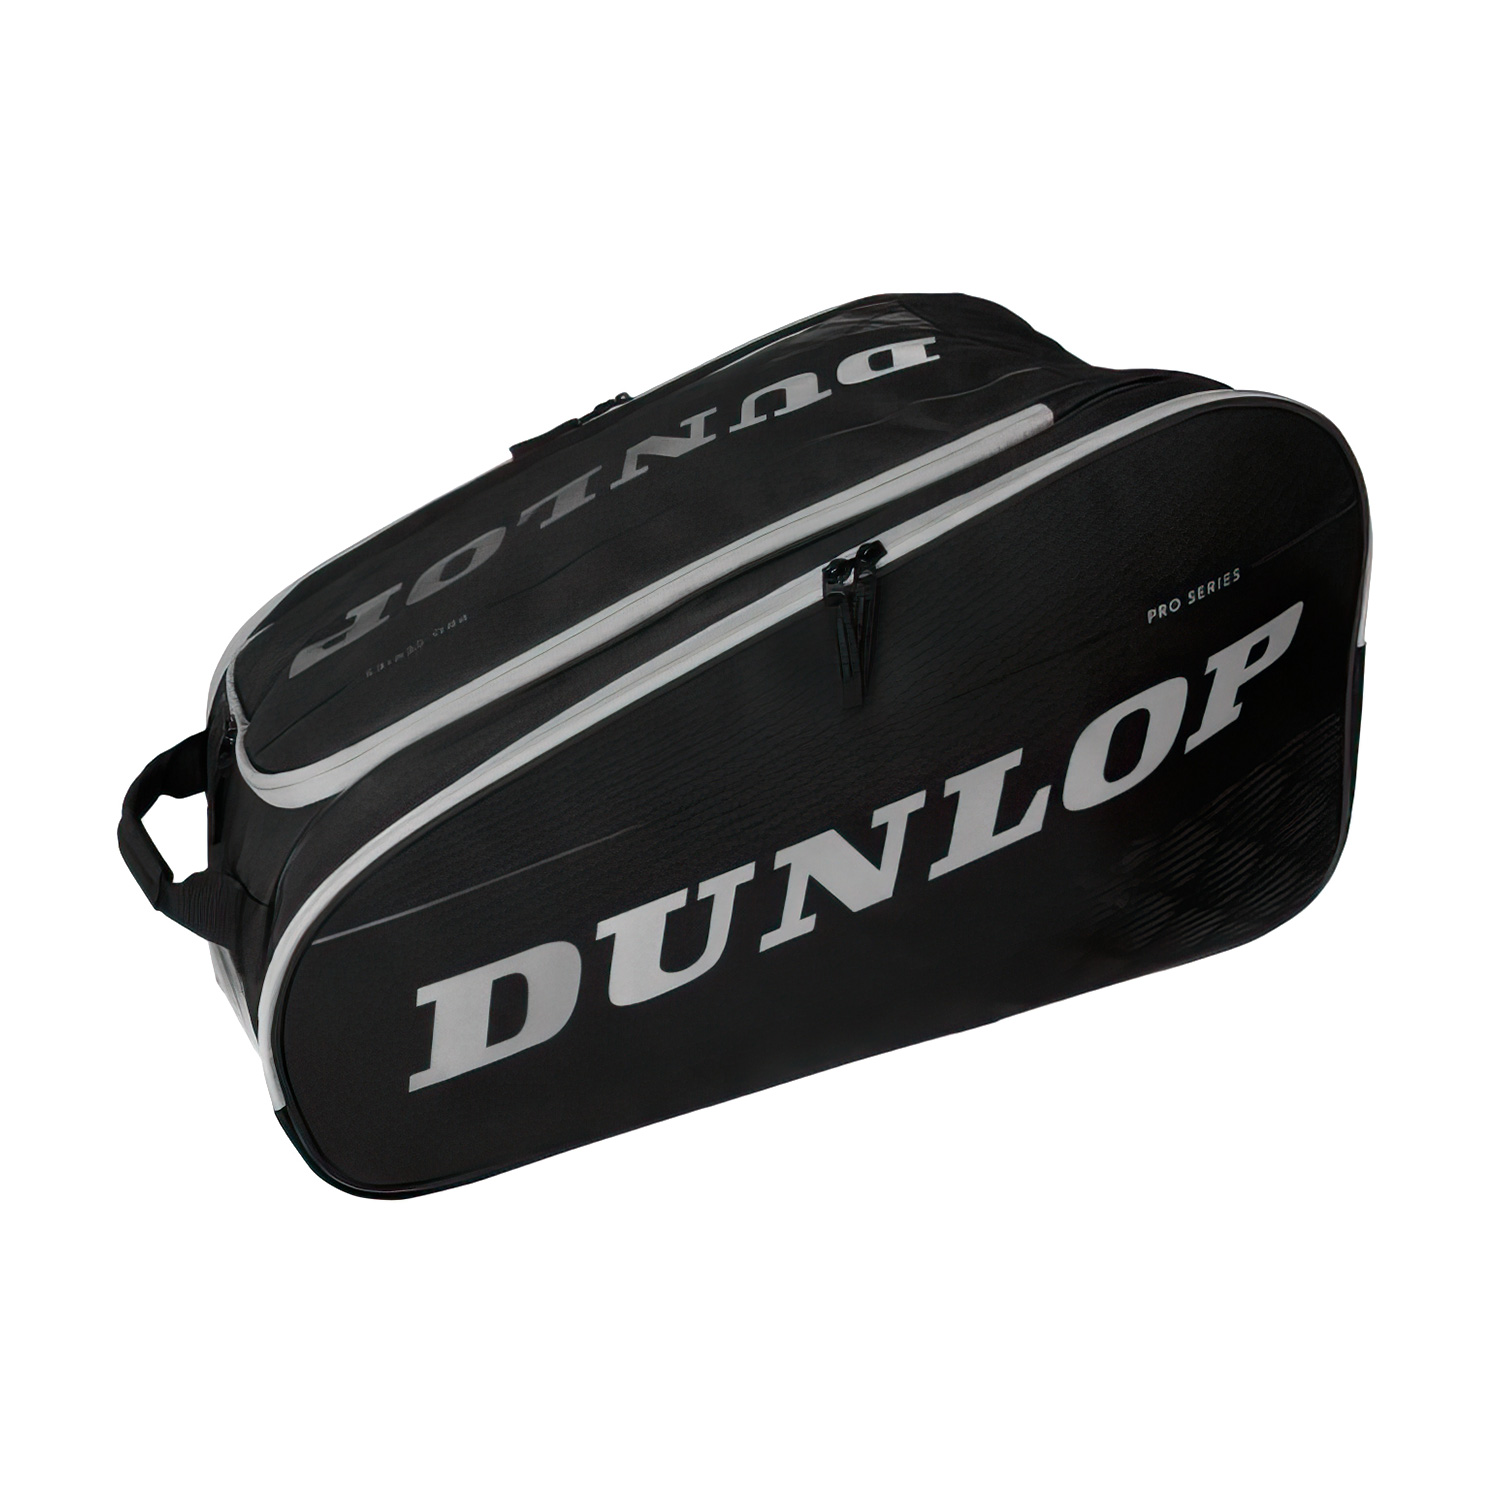 Dunlop Pro Series Thermo Borsa - Black/Silver